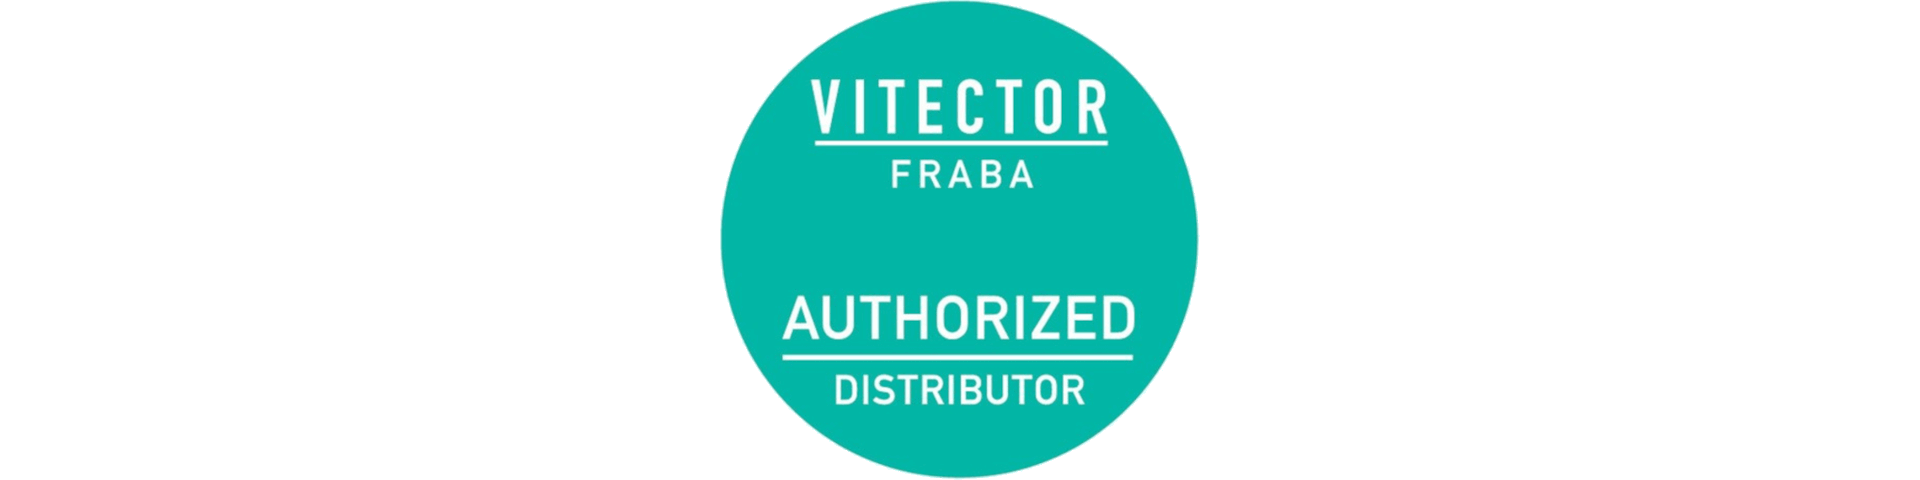 Authorized Distributor FRABA Vitector